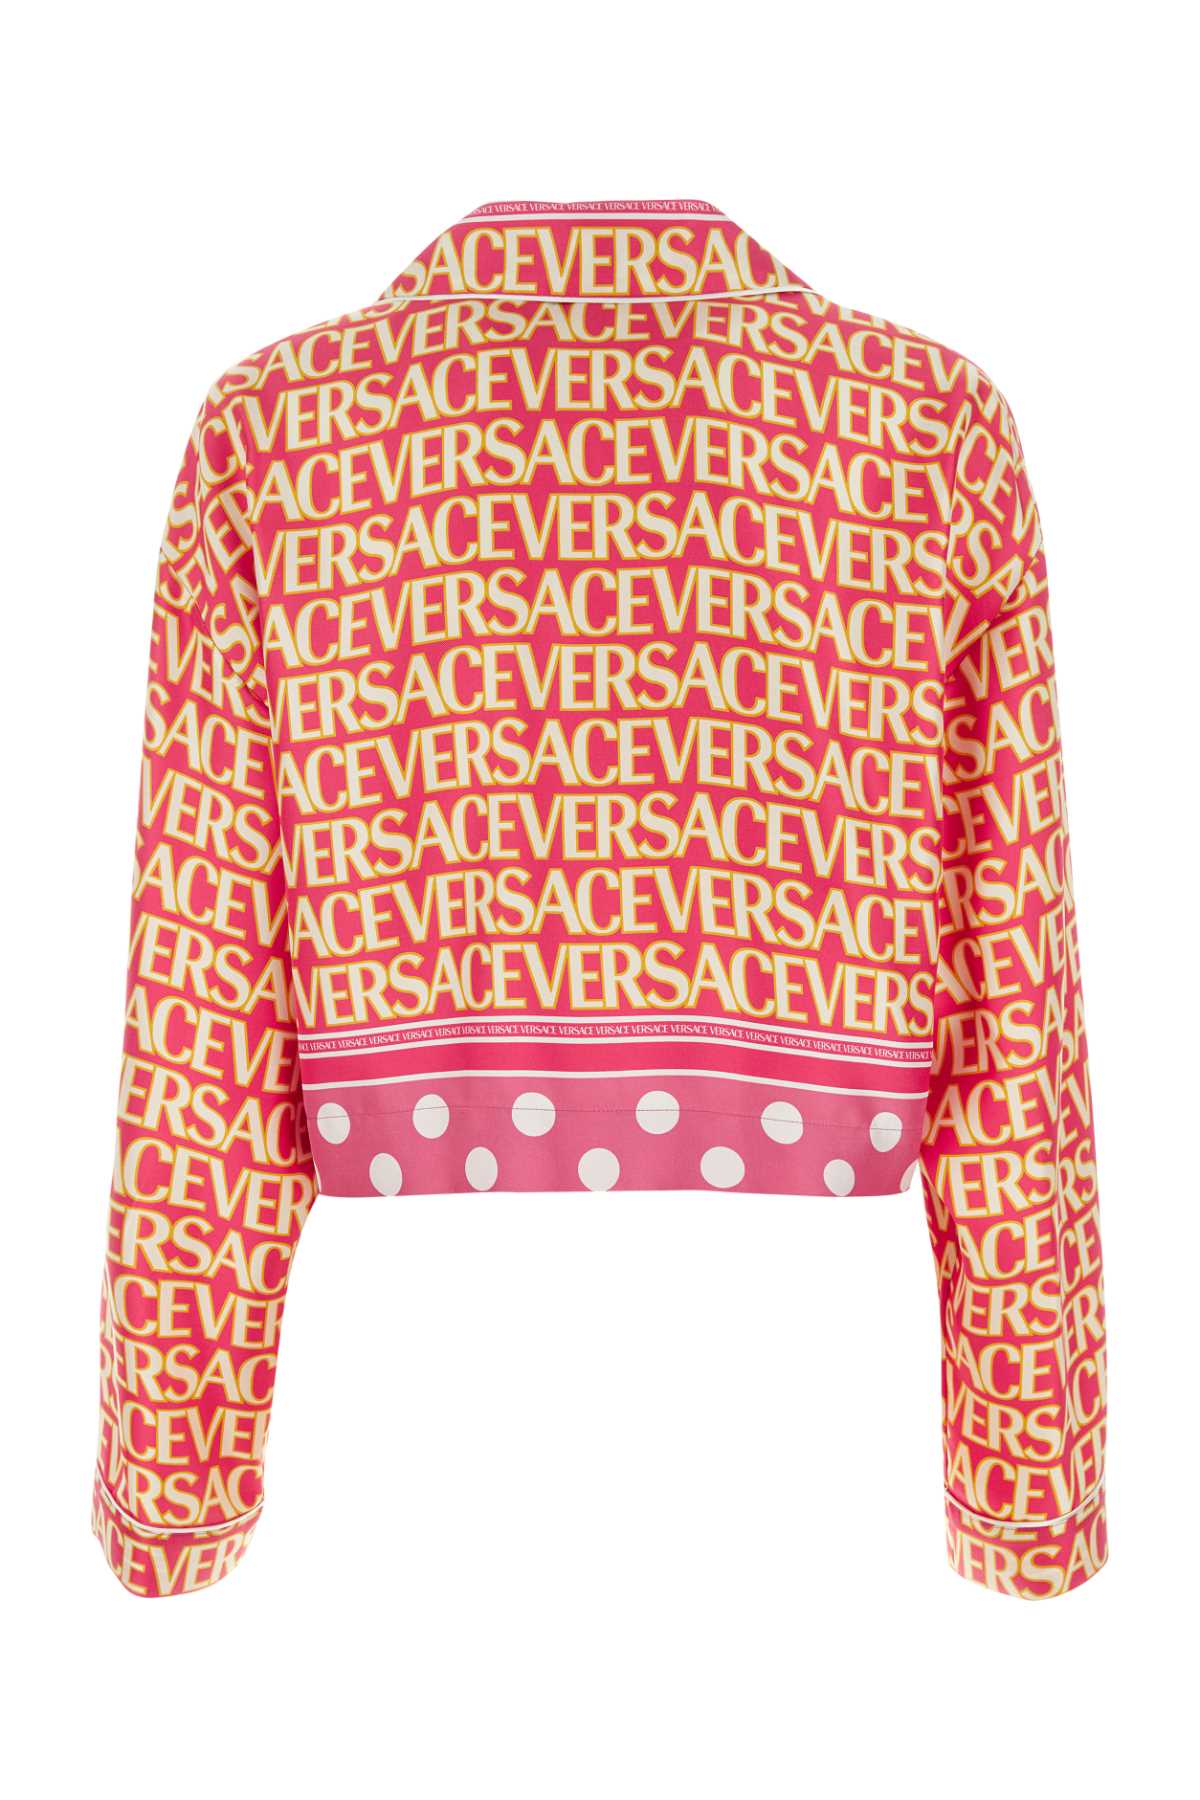 Versace Printed Silk Shirt In 5p150